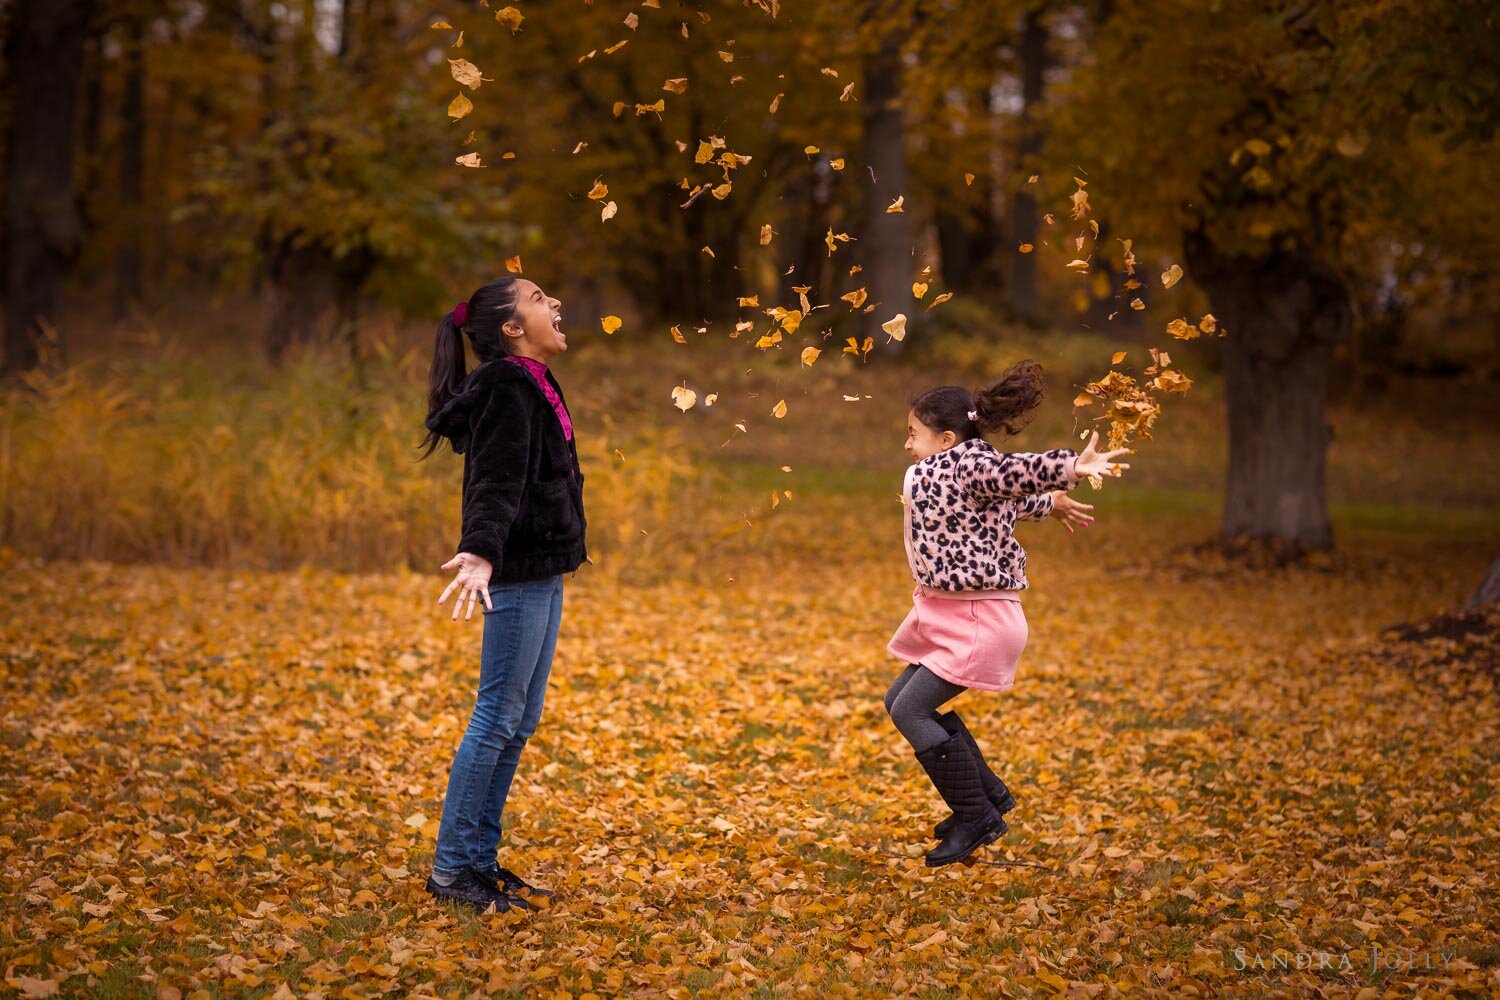 fun-autumn-family-photo-session-by-sandra-jolly-photography.jpg